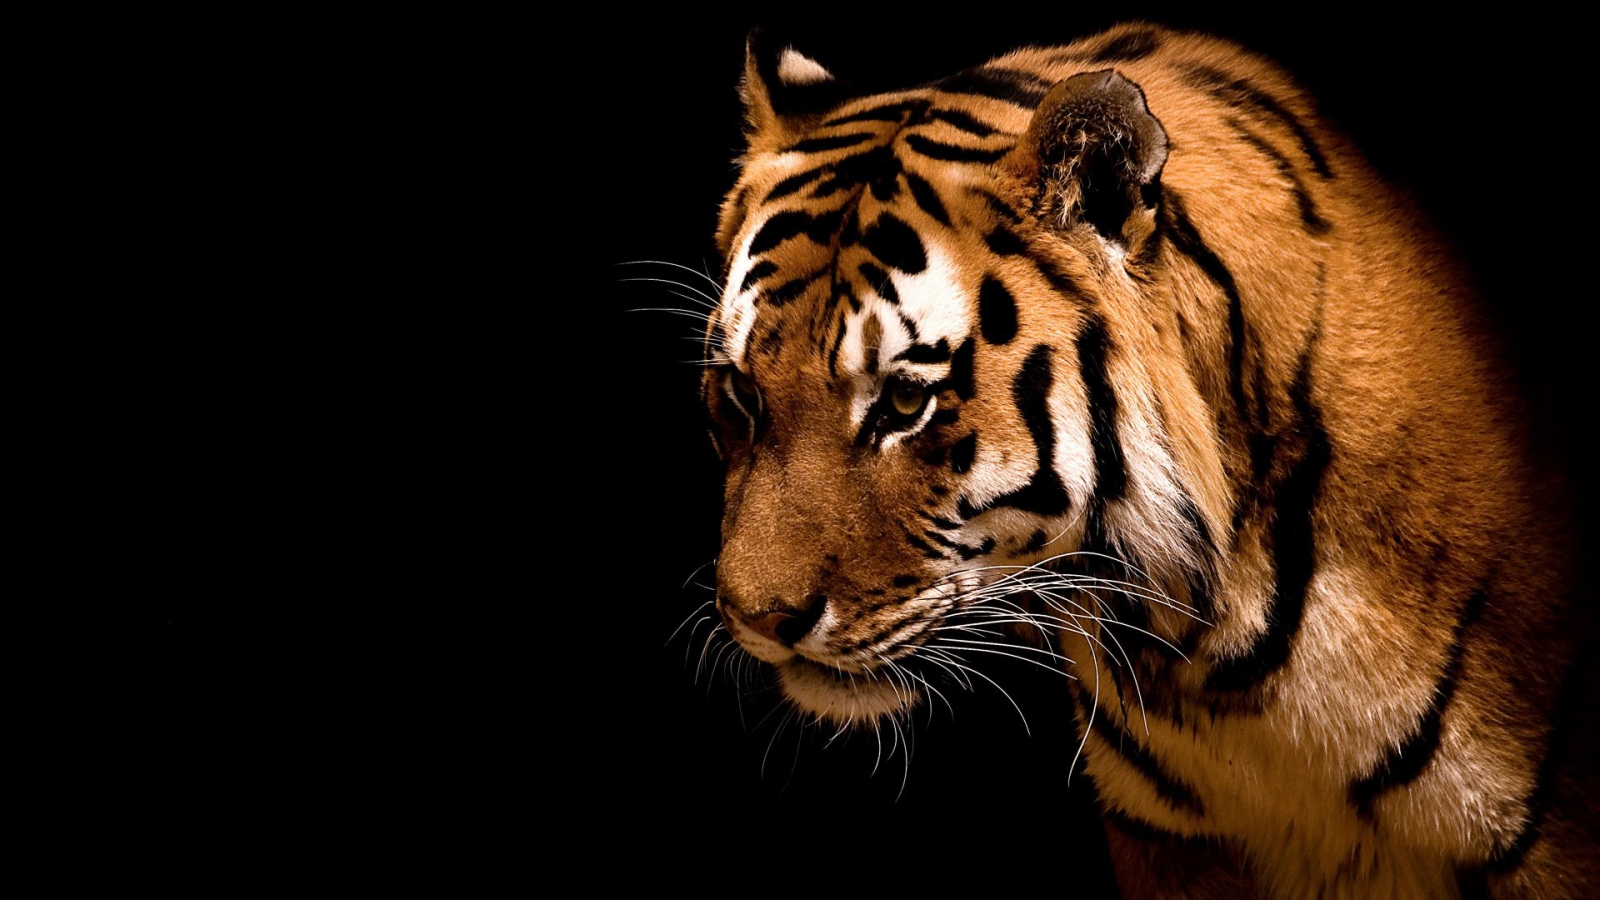 Impressive Tiger for 1600 x 900 HDTV resolution